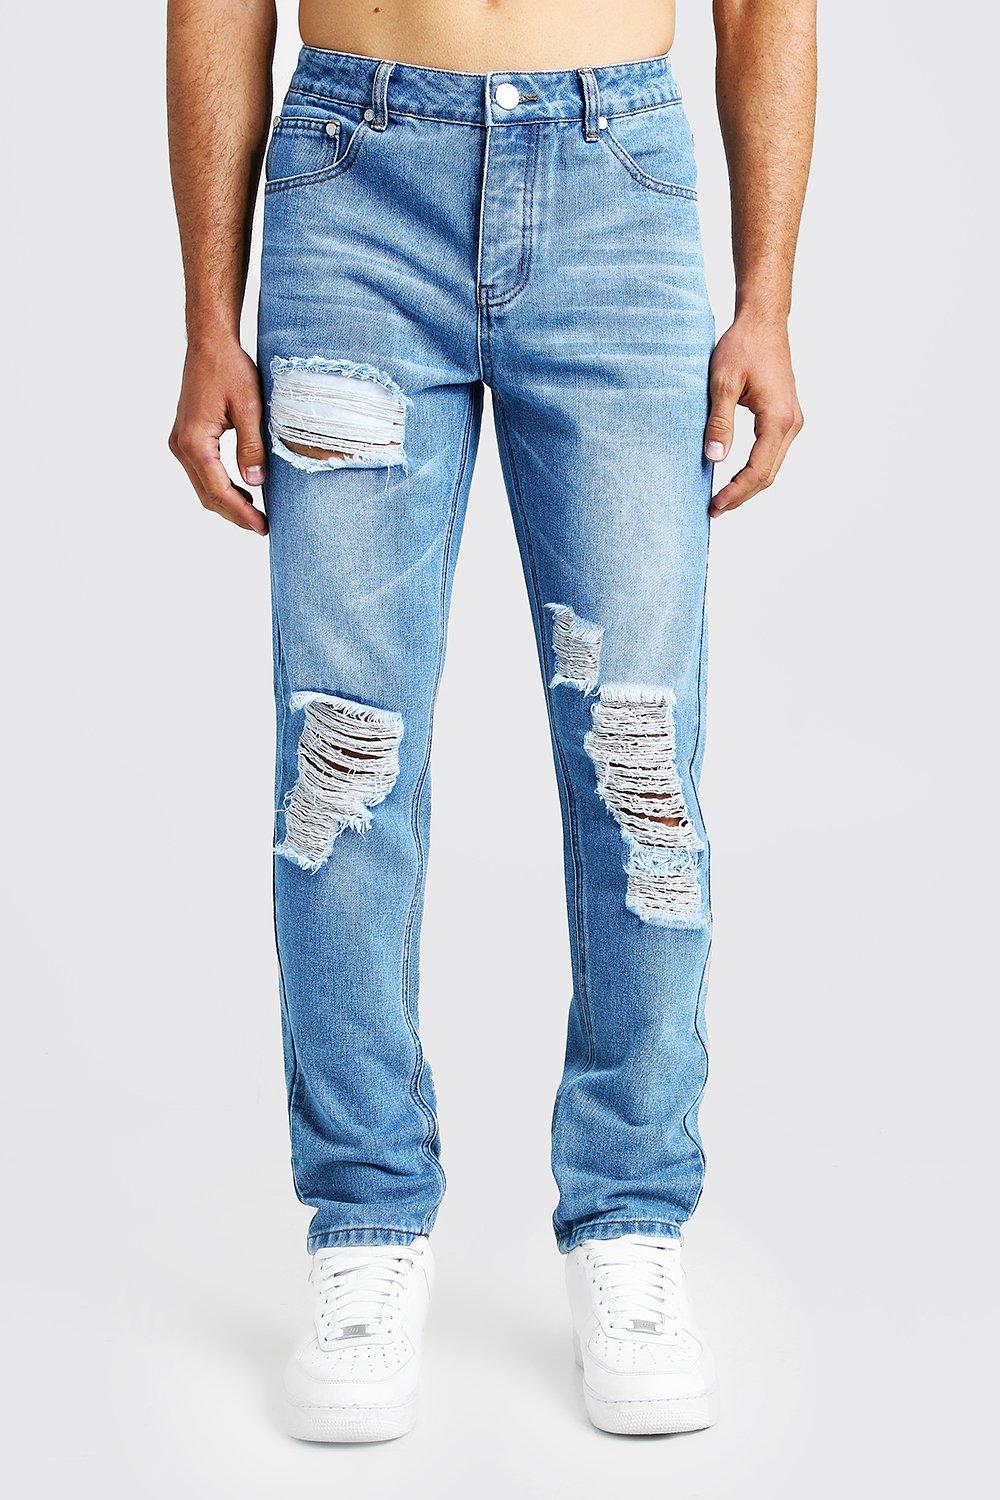 distressed denim jeans mens